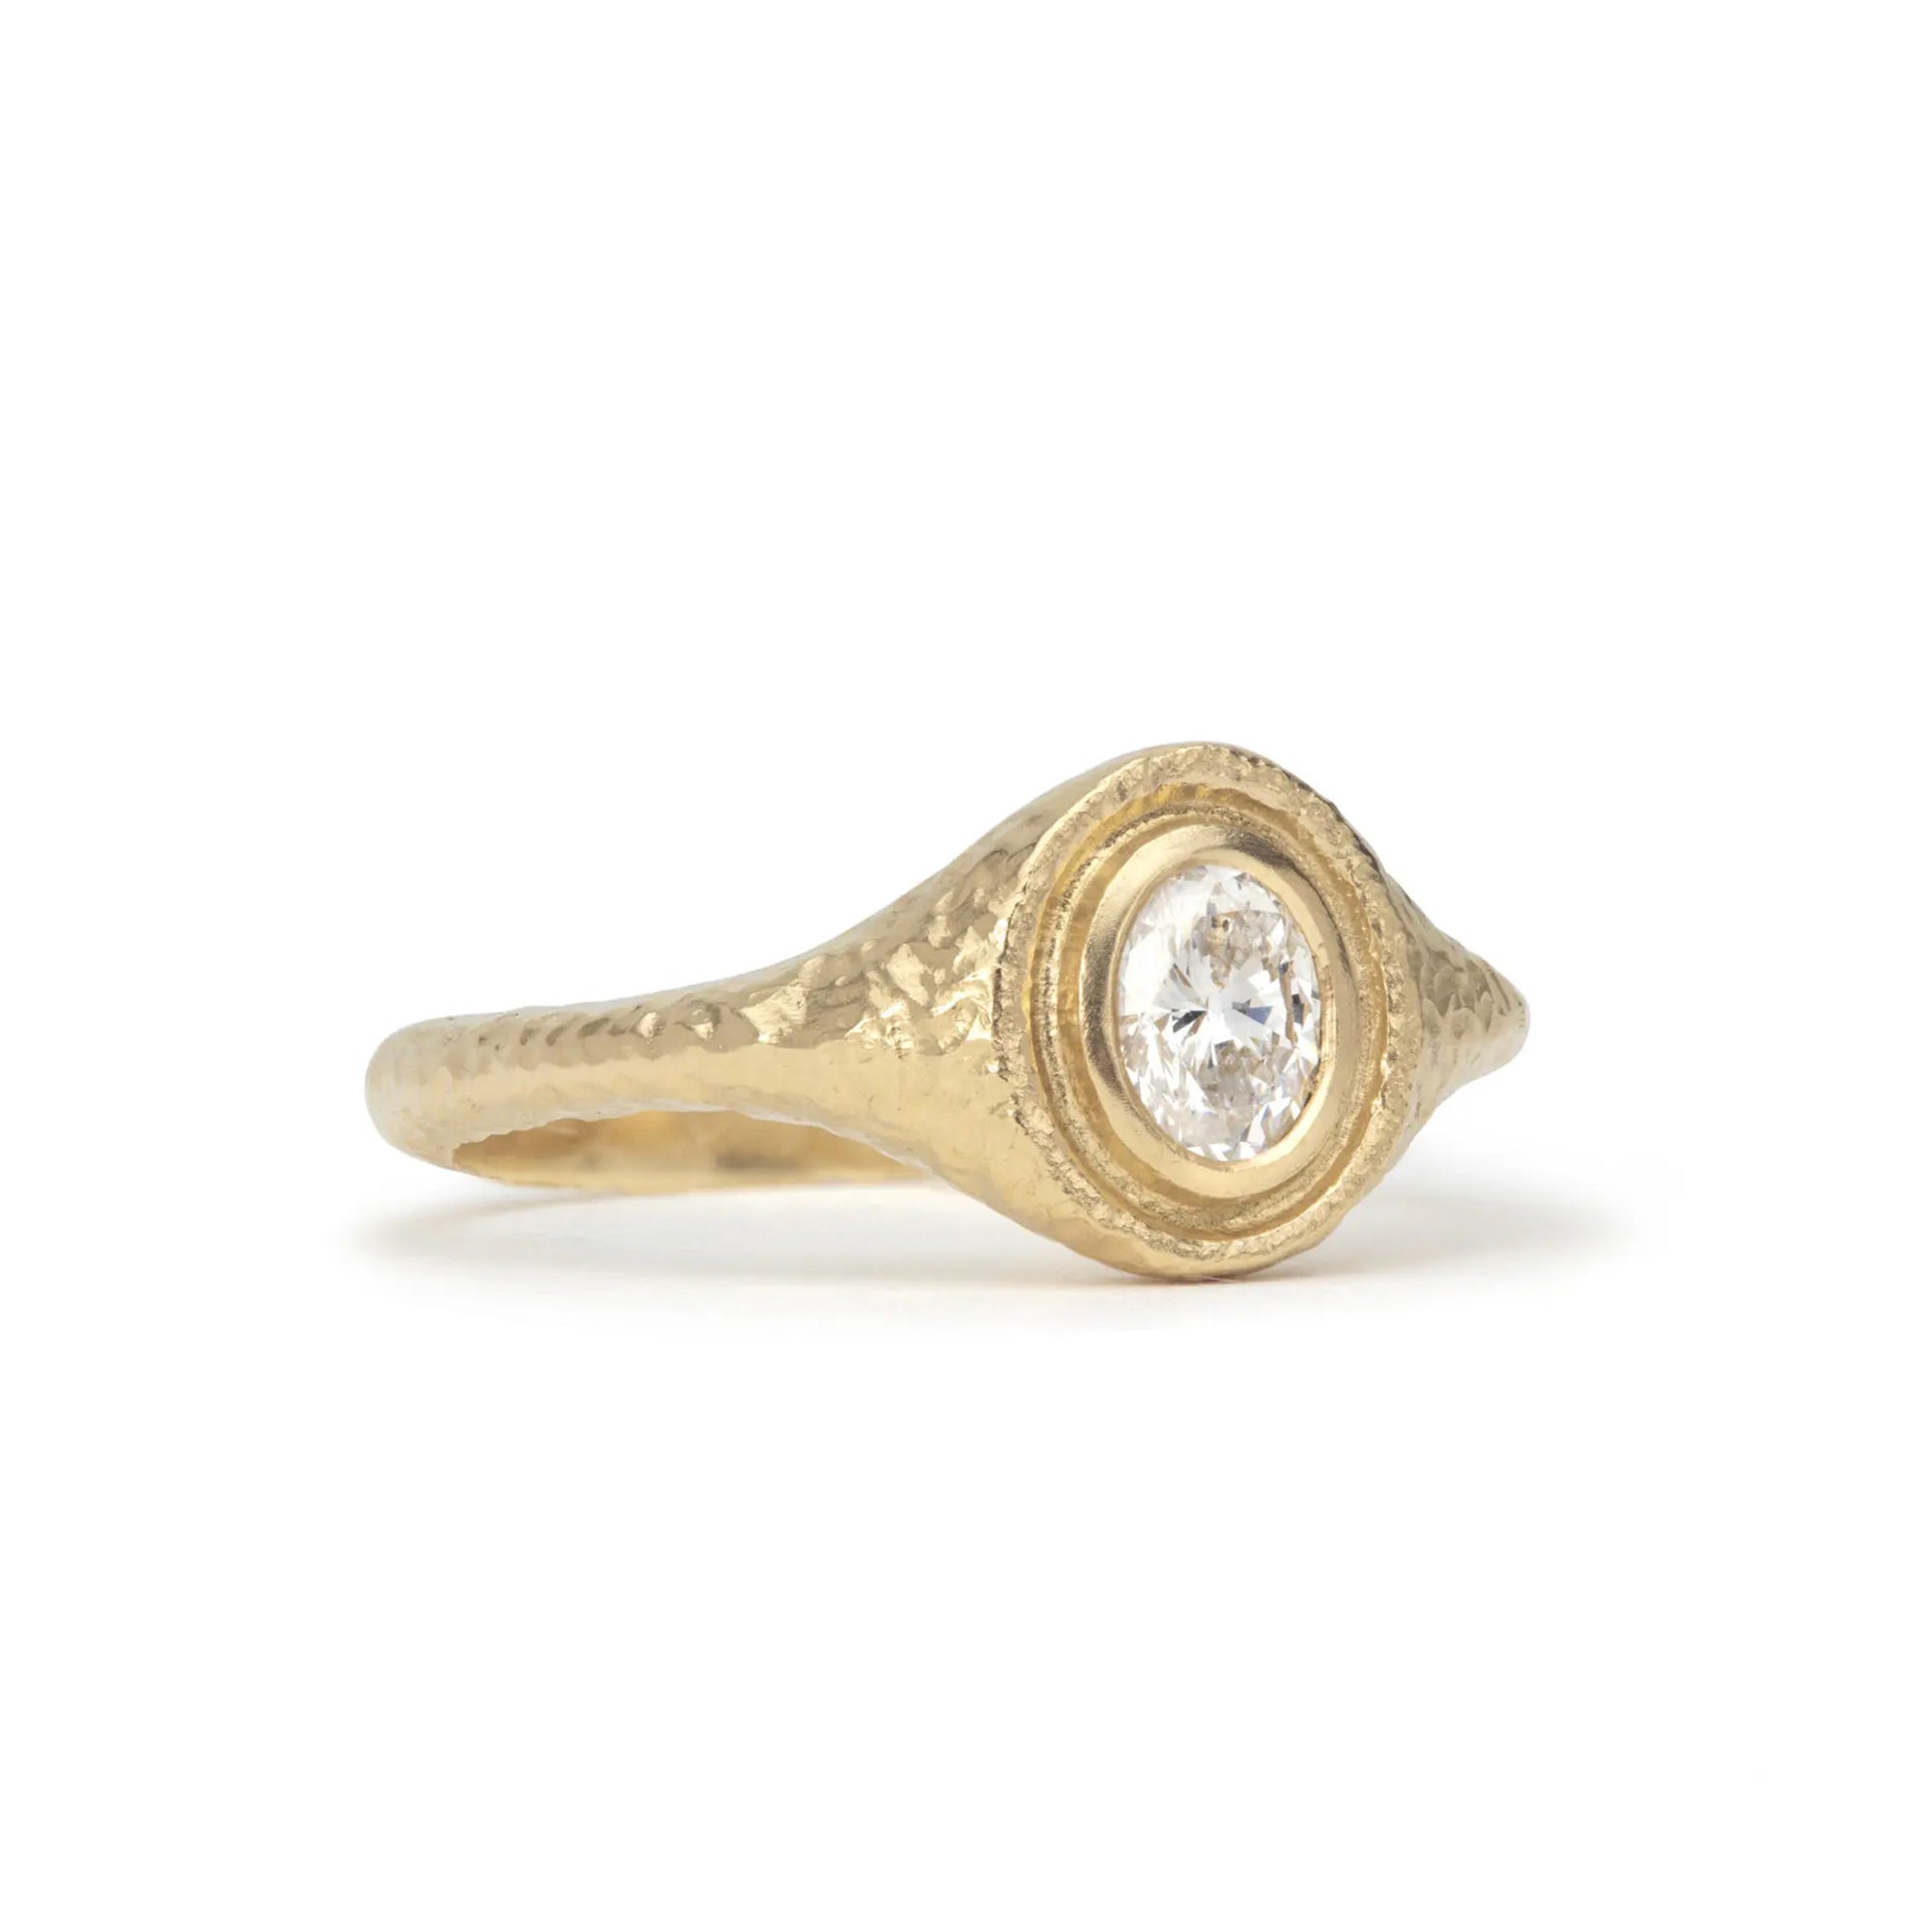    maya-selway-theres-plenty-diamond-signet-ring